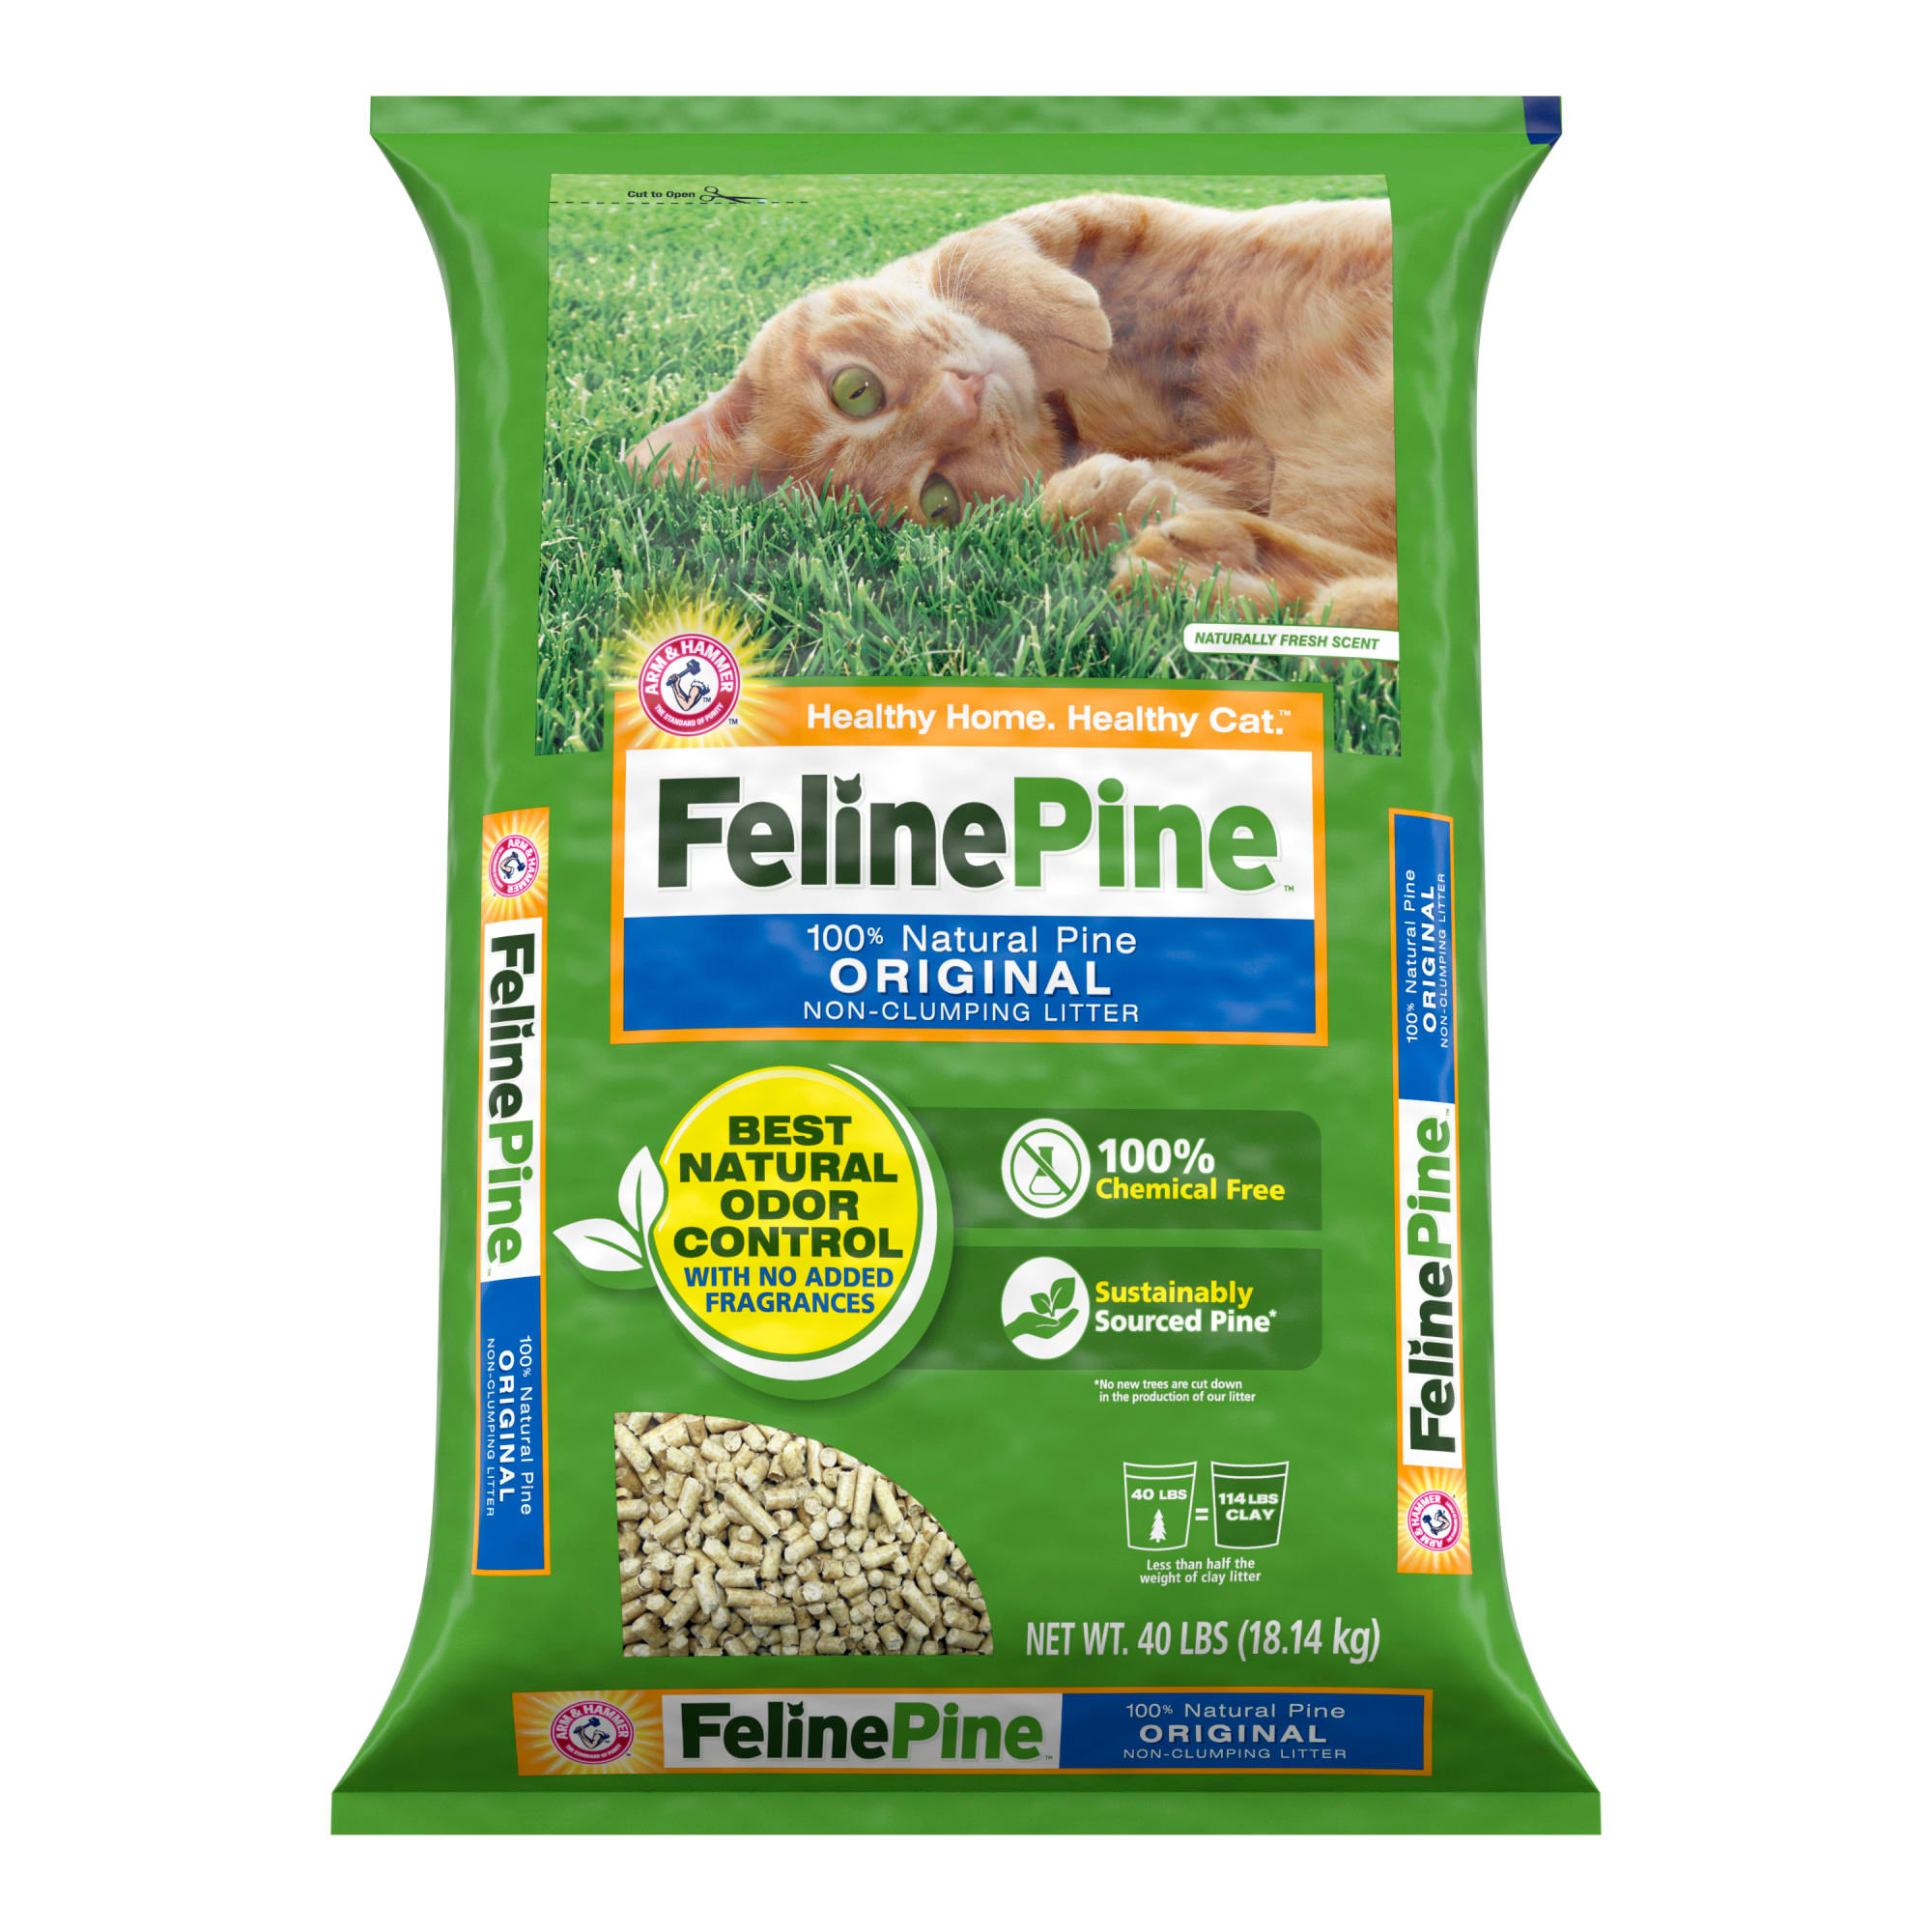 Feline Pine Original Cat Litter, 40 lbs. Petco